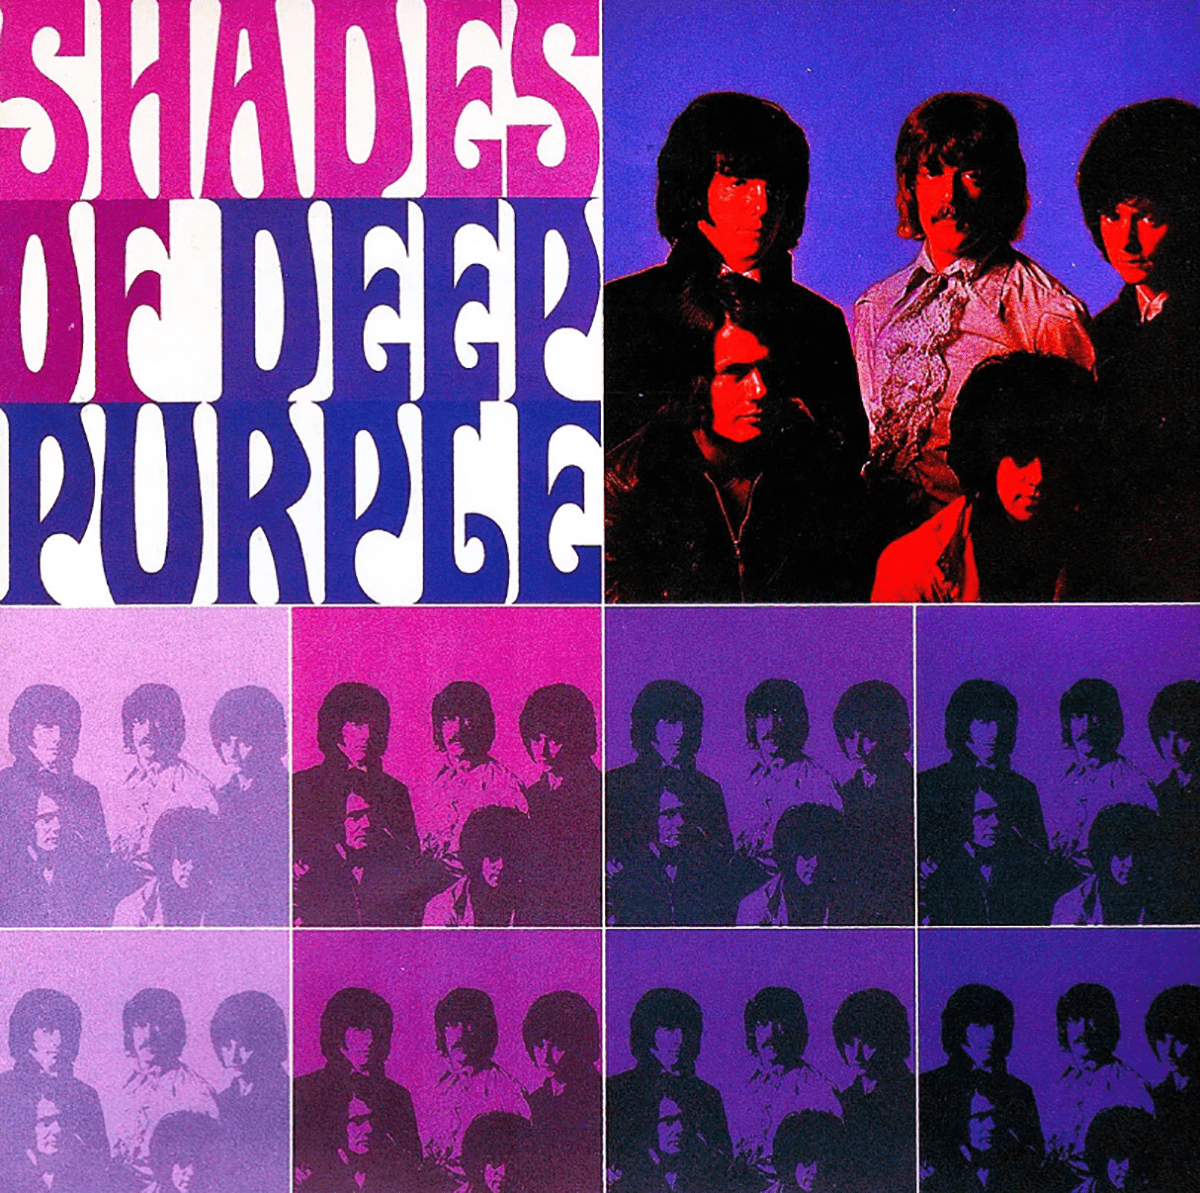 Обложка студийного альбома "Shades of Deep Purple", 1968